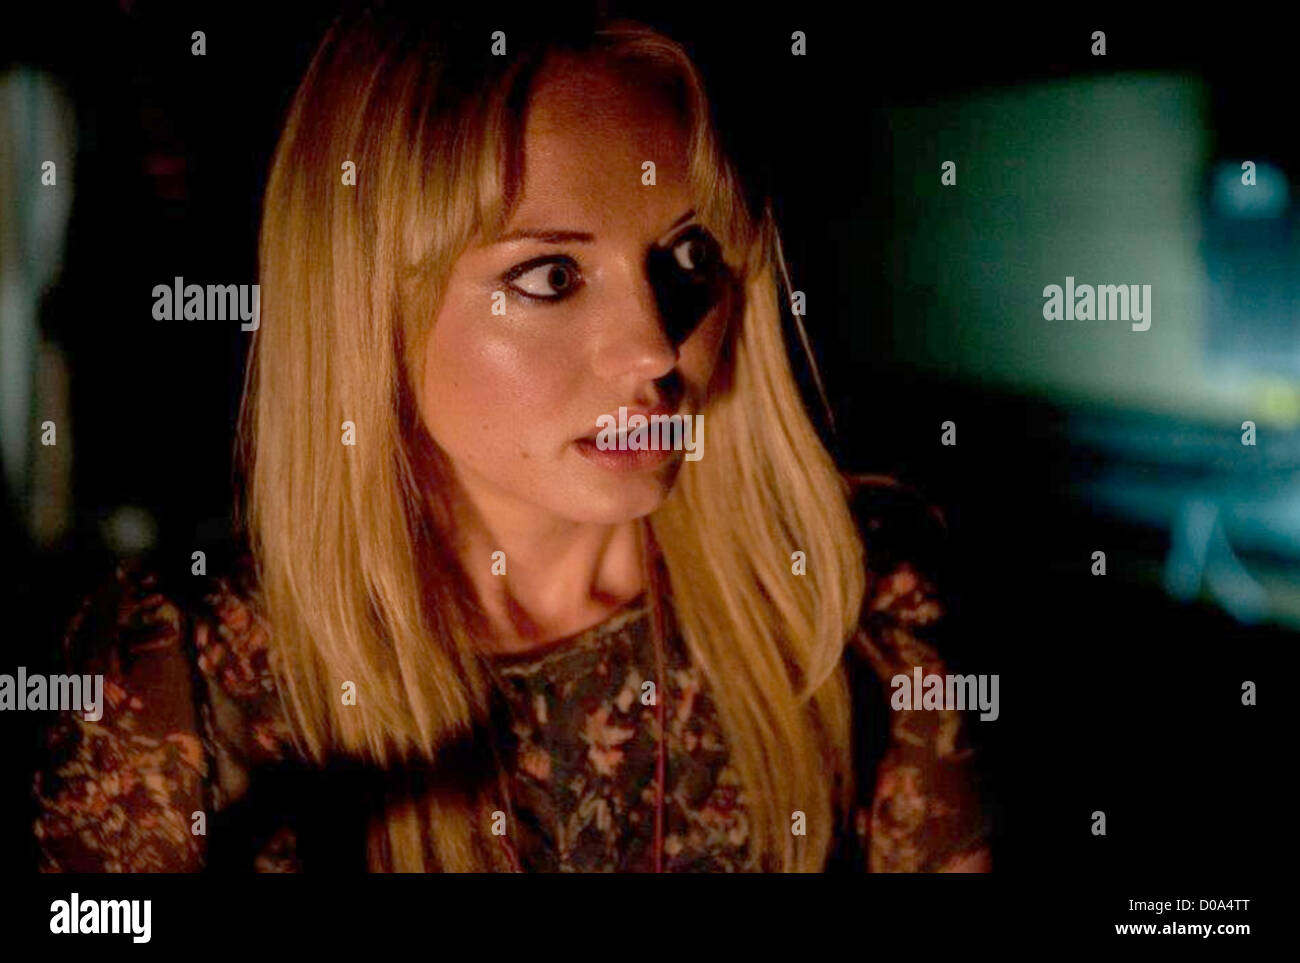 24 - 2013 ALMACENAMIENTO Magnet Releasing's Film con Laura Haddock como Nikki Foto de stock